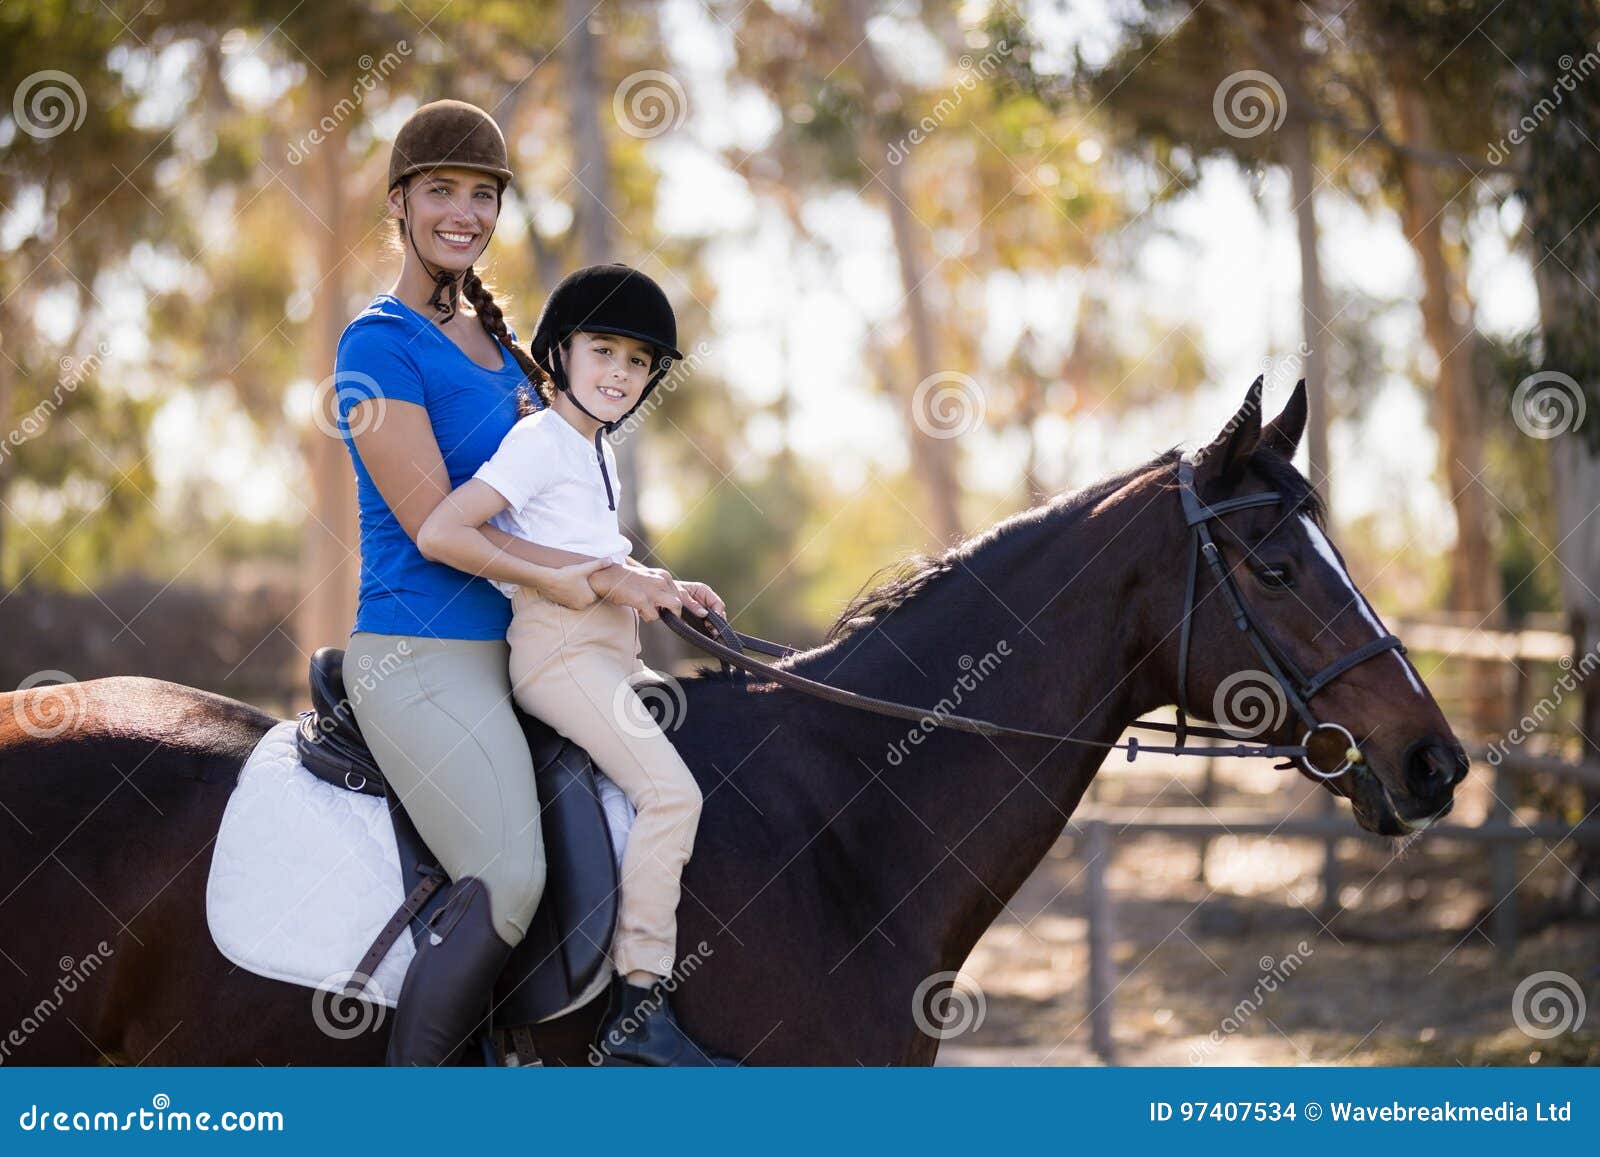 portrait of female jockey and girl sitting horseback riding